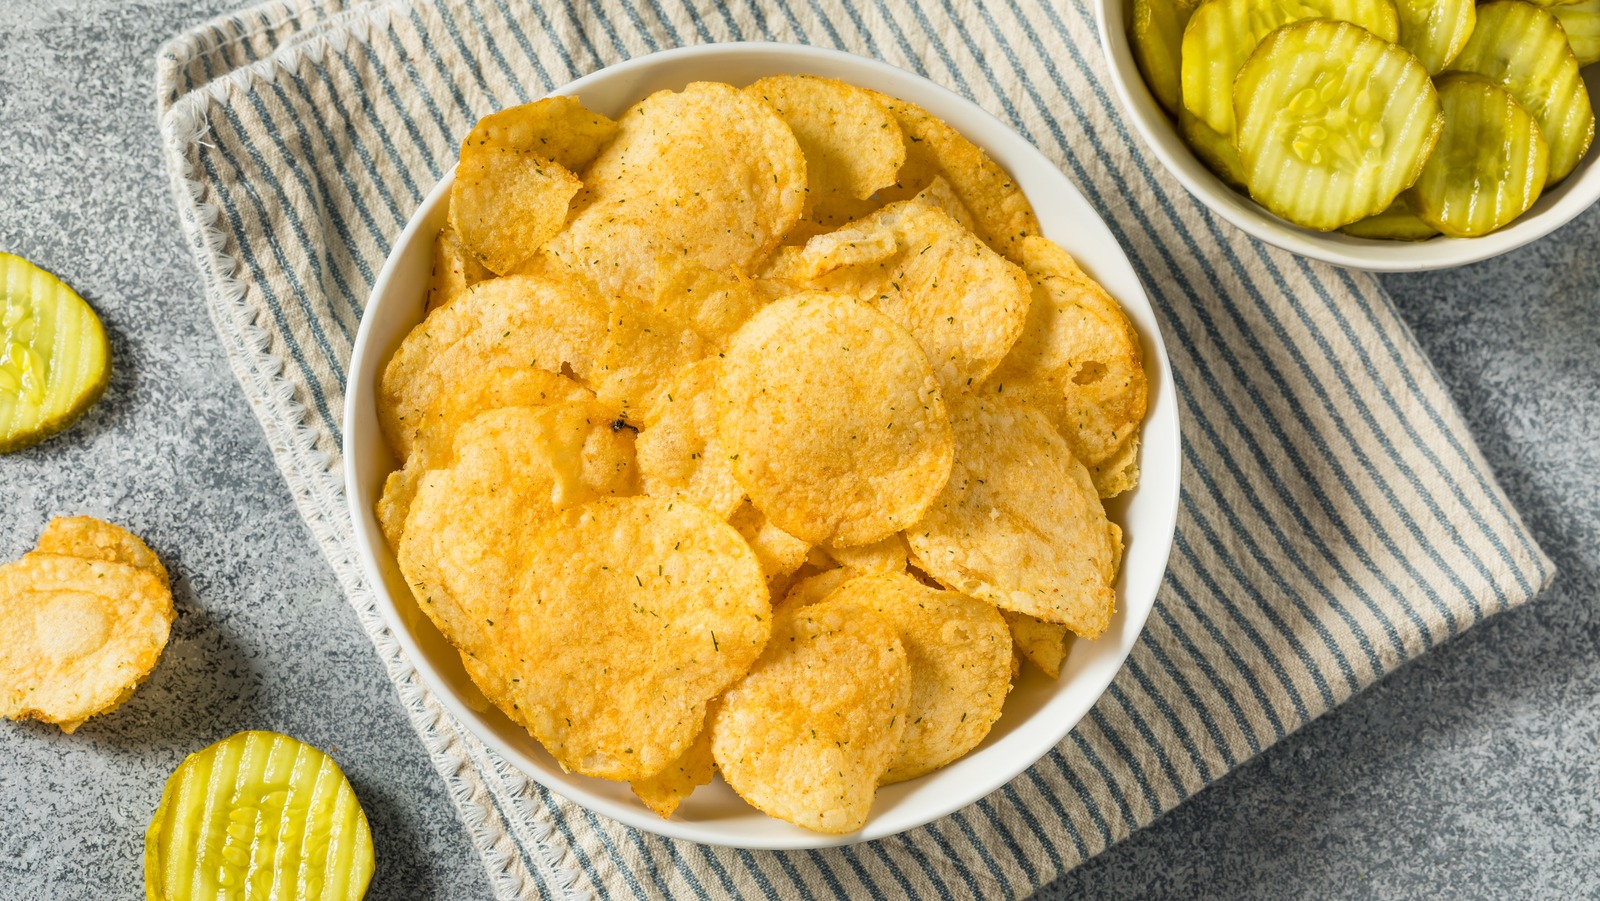 REVIEW: Flamin' Hot Ruffles Potato Chips - The Impulsive Buy